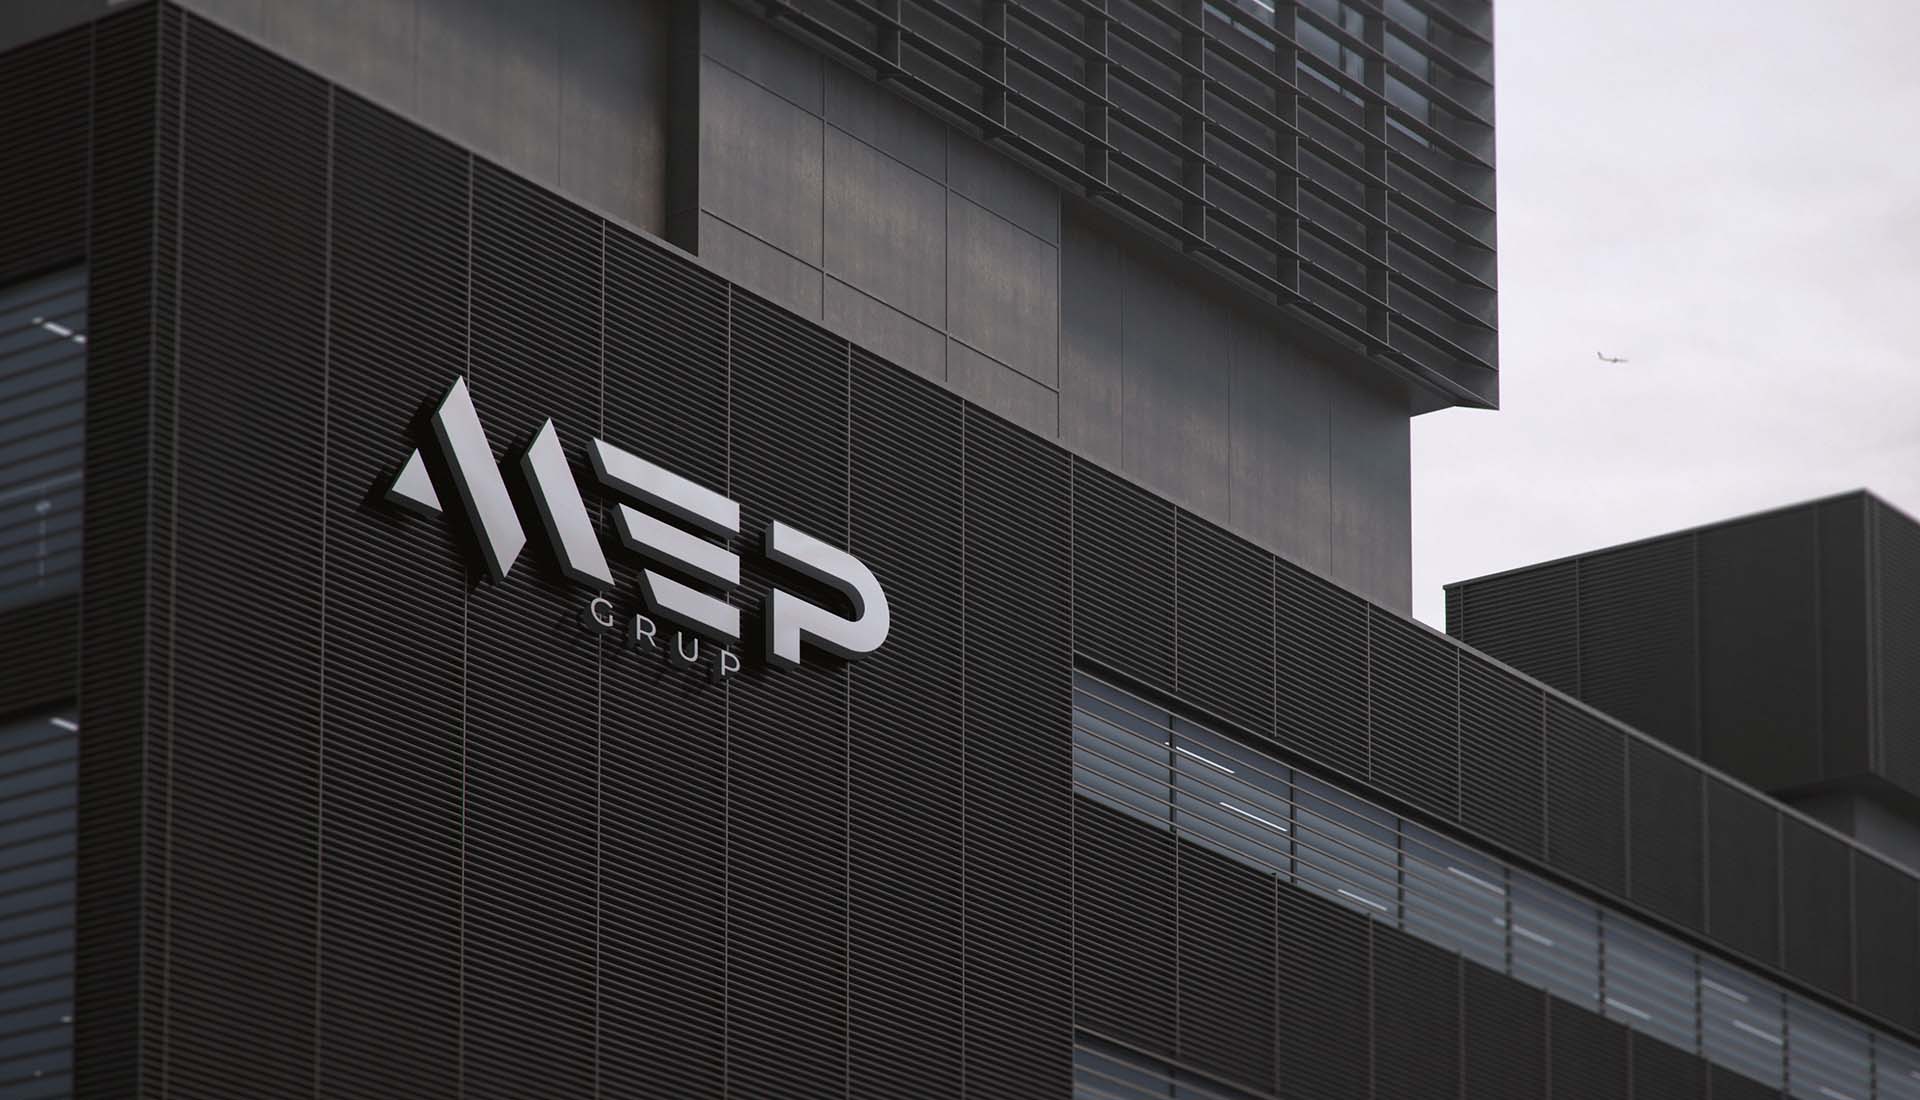 Mep_Logo4